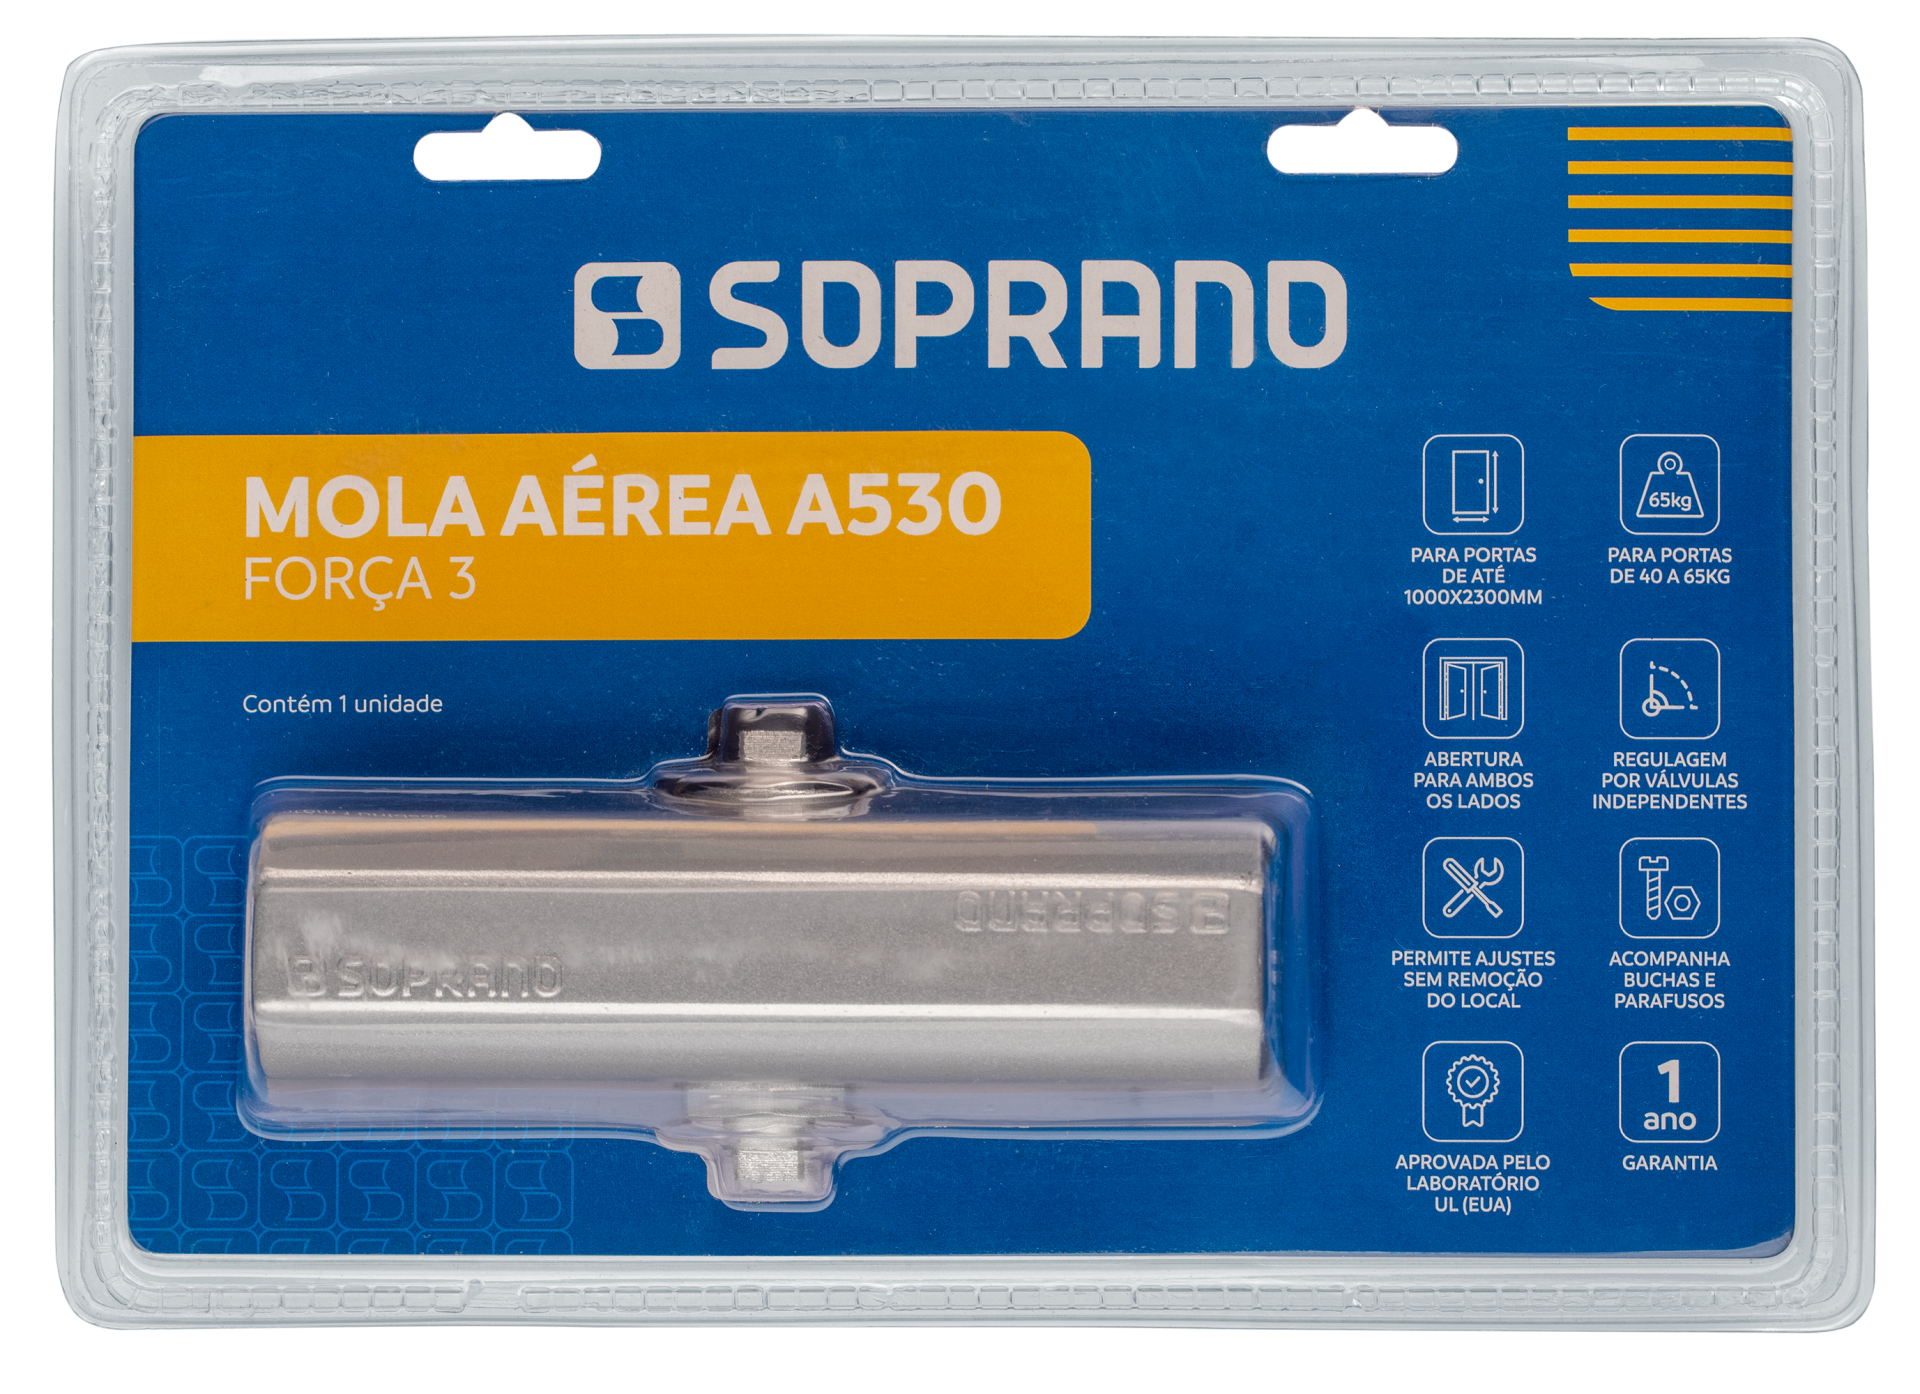 MOLA AEREA A530 FORCA 3 PRATA BLISTER - Soprano